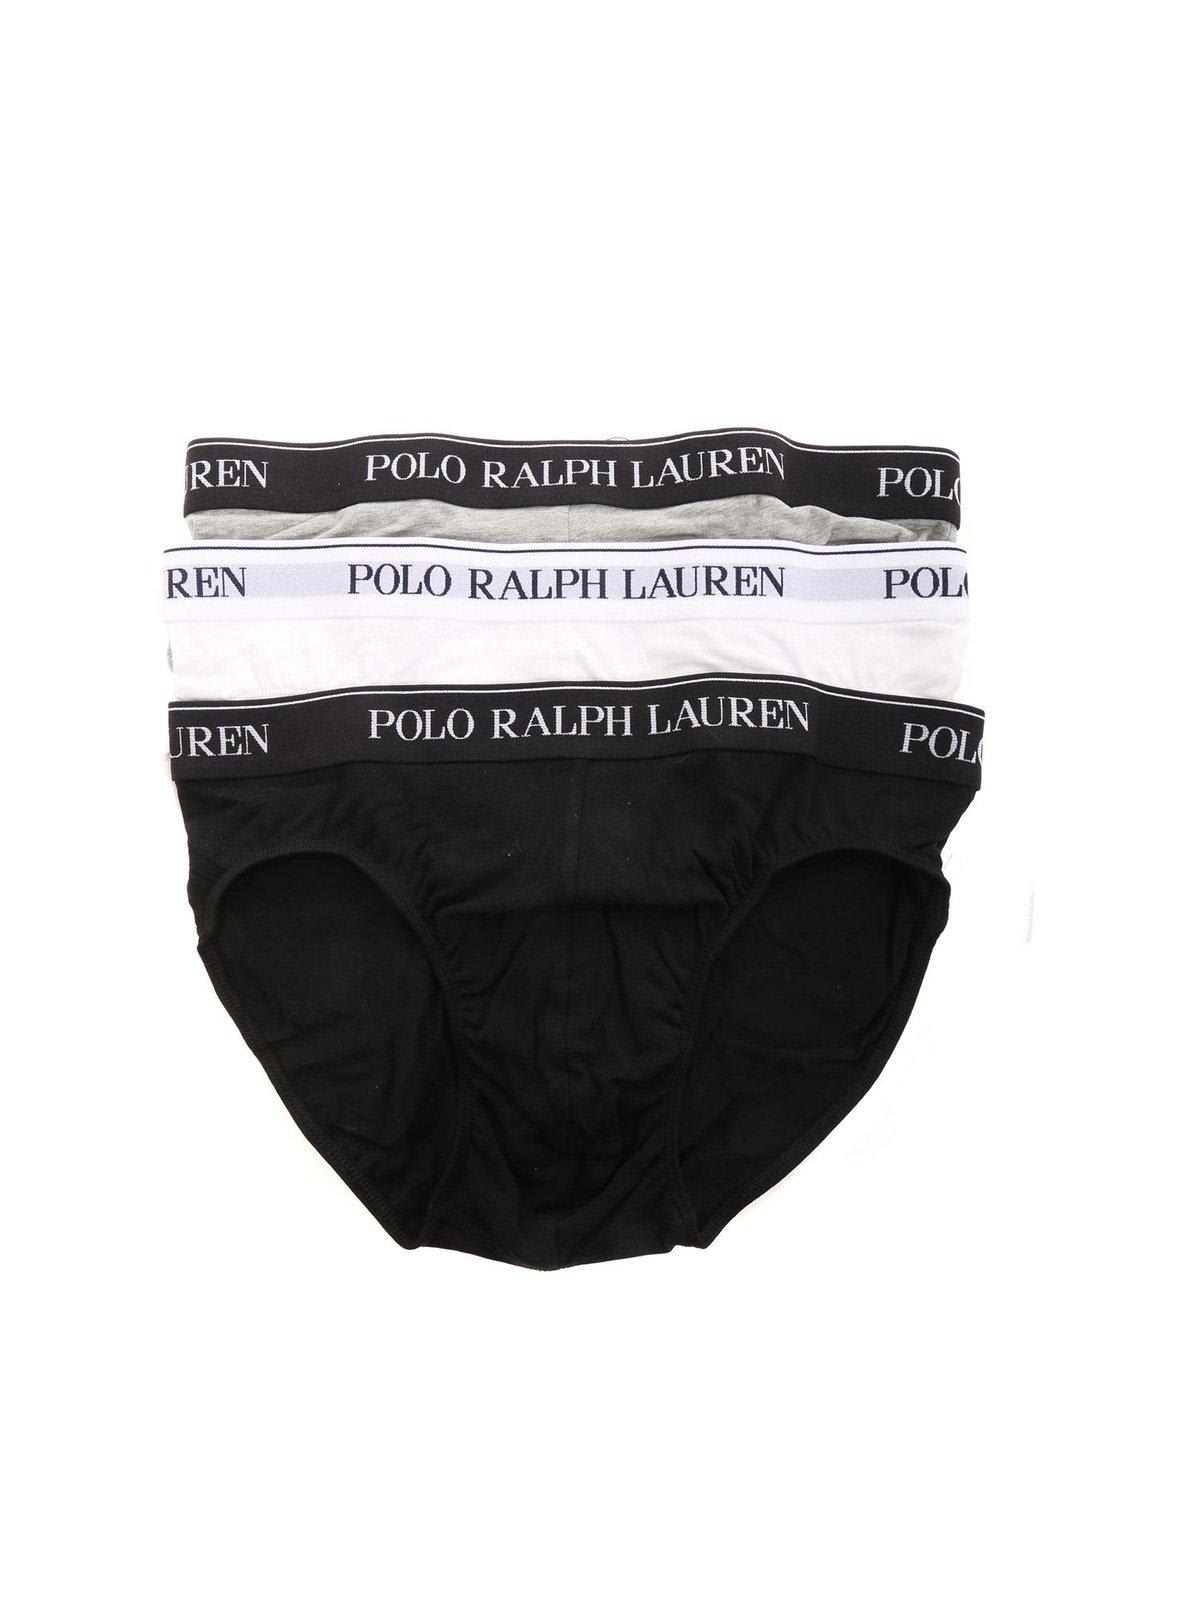 Polo Ralph Lauren LOW RISE - Briefs - white/black/andover/white 